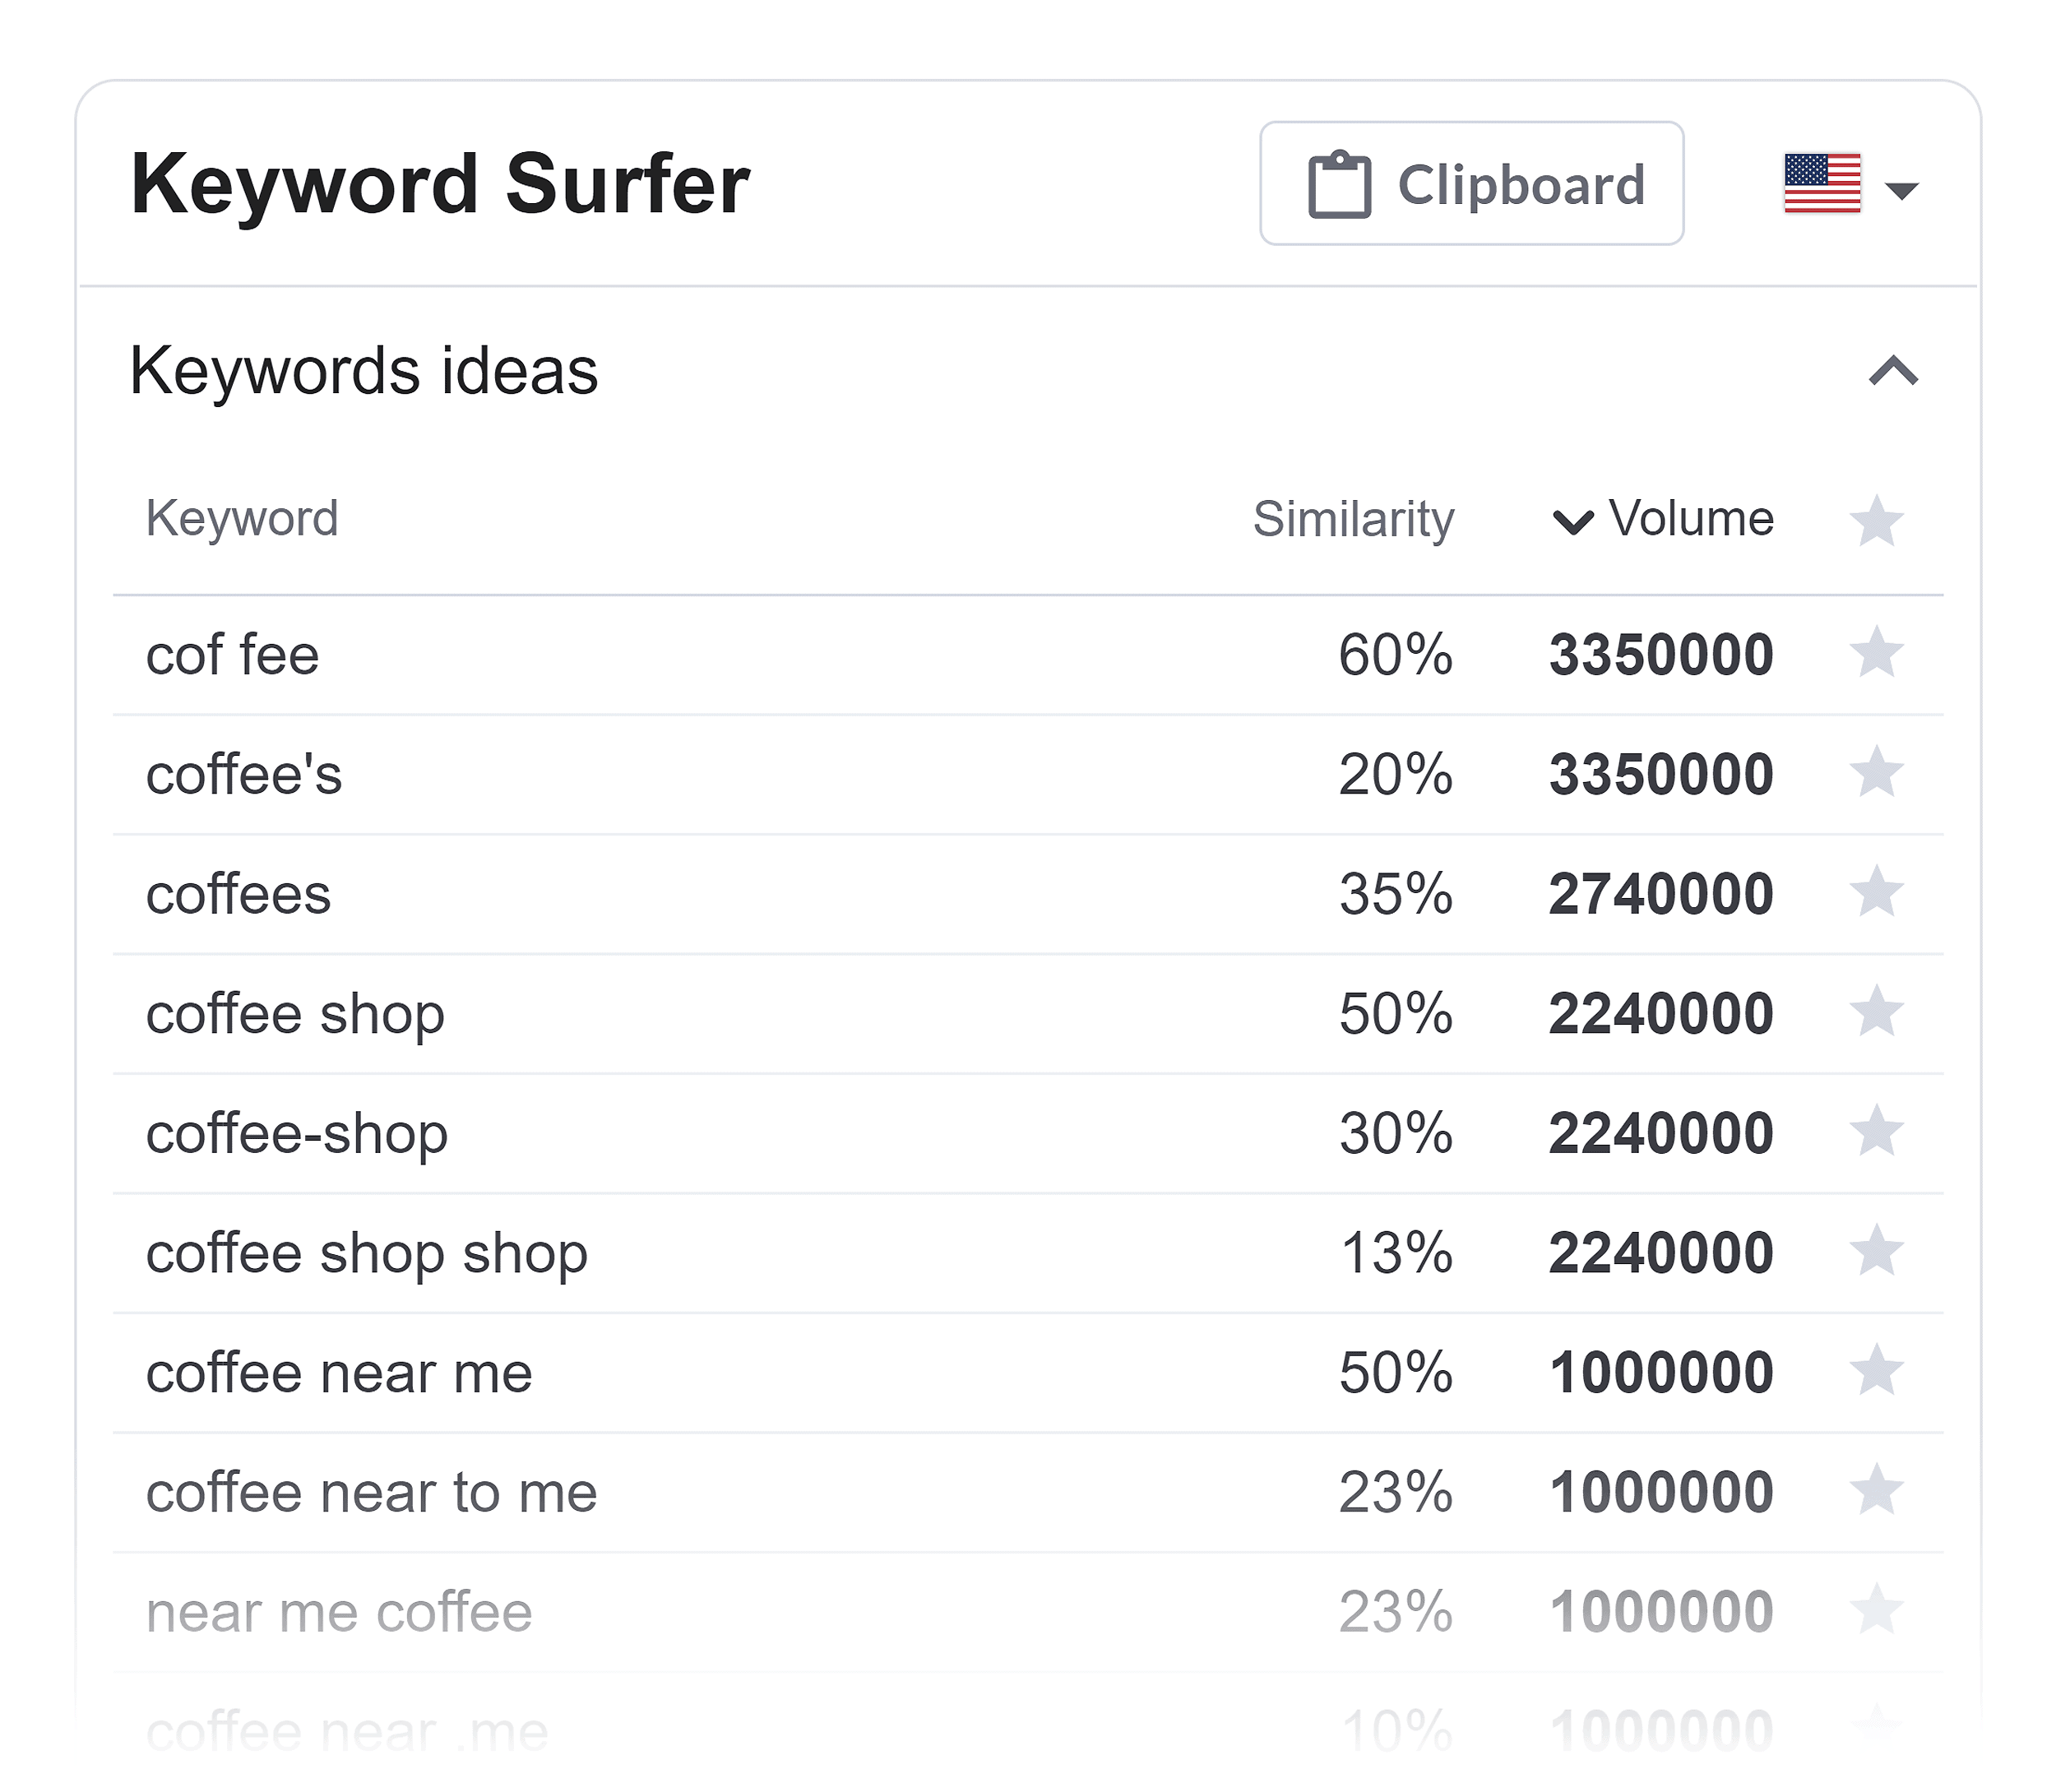 Keyword Surfer – Coffee keyword ideas